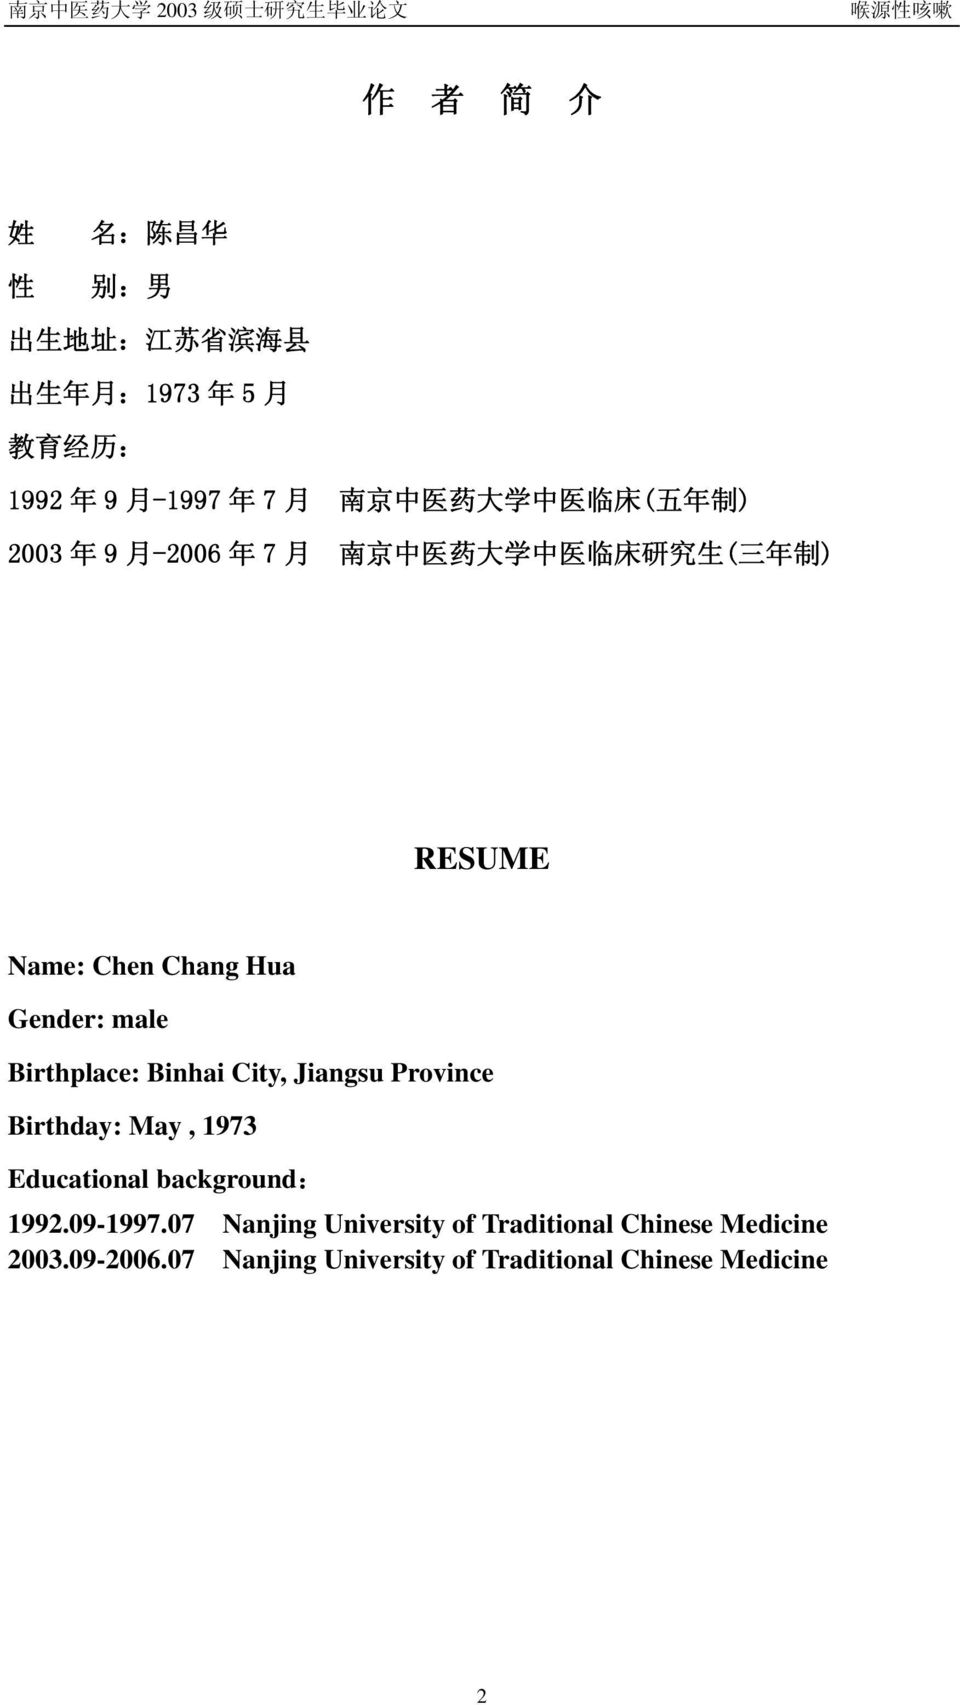 Gender: male Birthplace: Binhai City, Jiangsu Province Birthday: May, 1973 Educational background: 1992.09-1997.